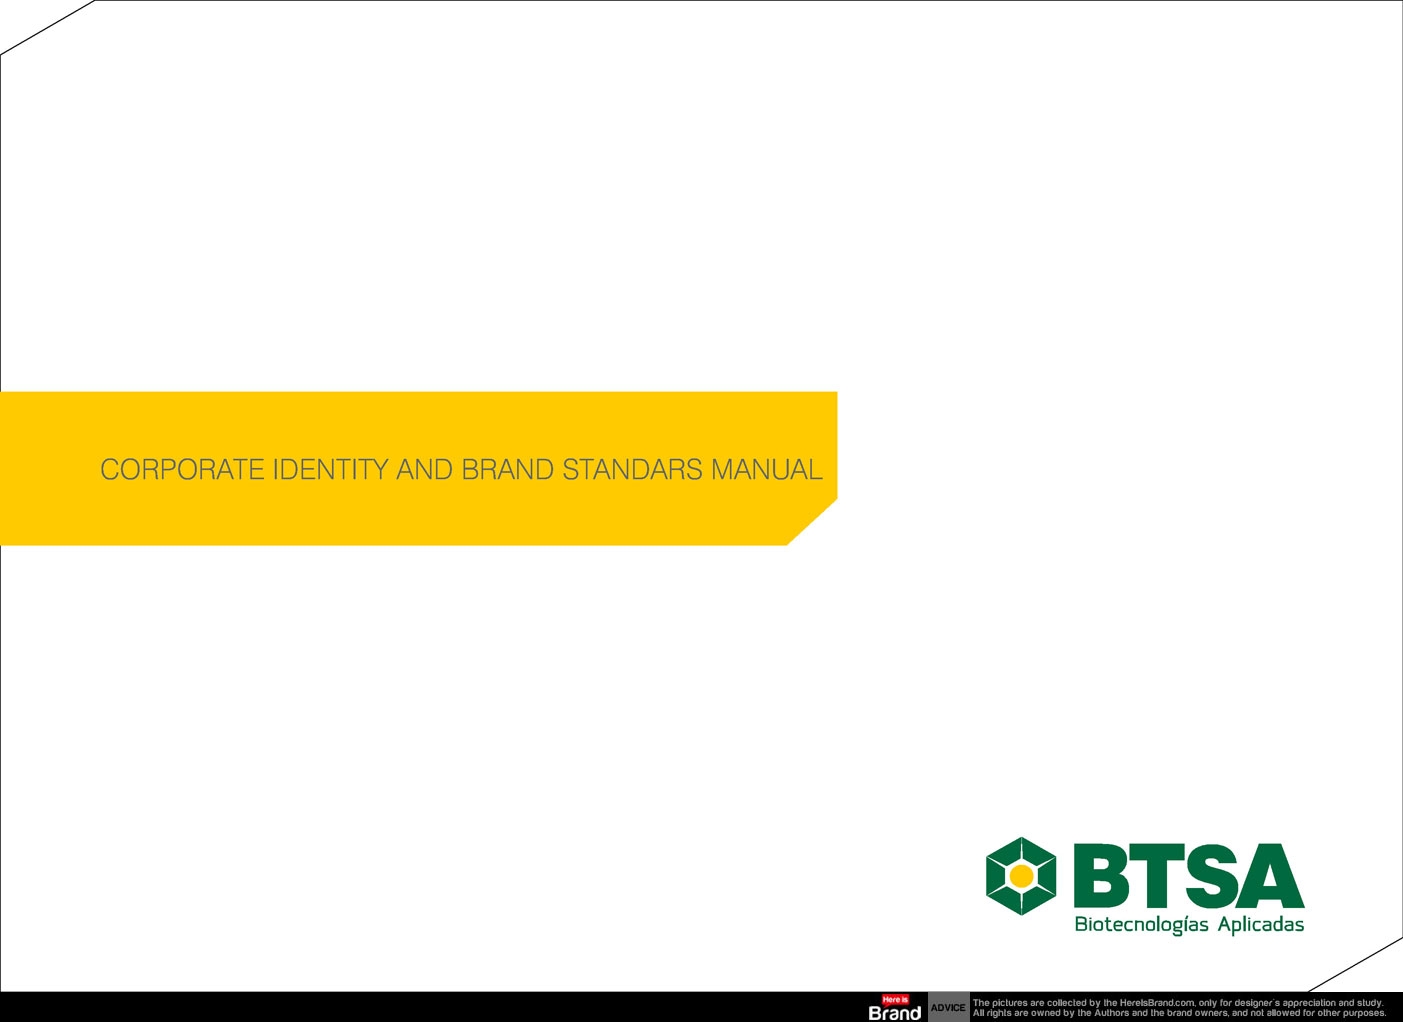 BTSA Corporate Identity and Brand Standards Manual